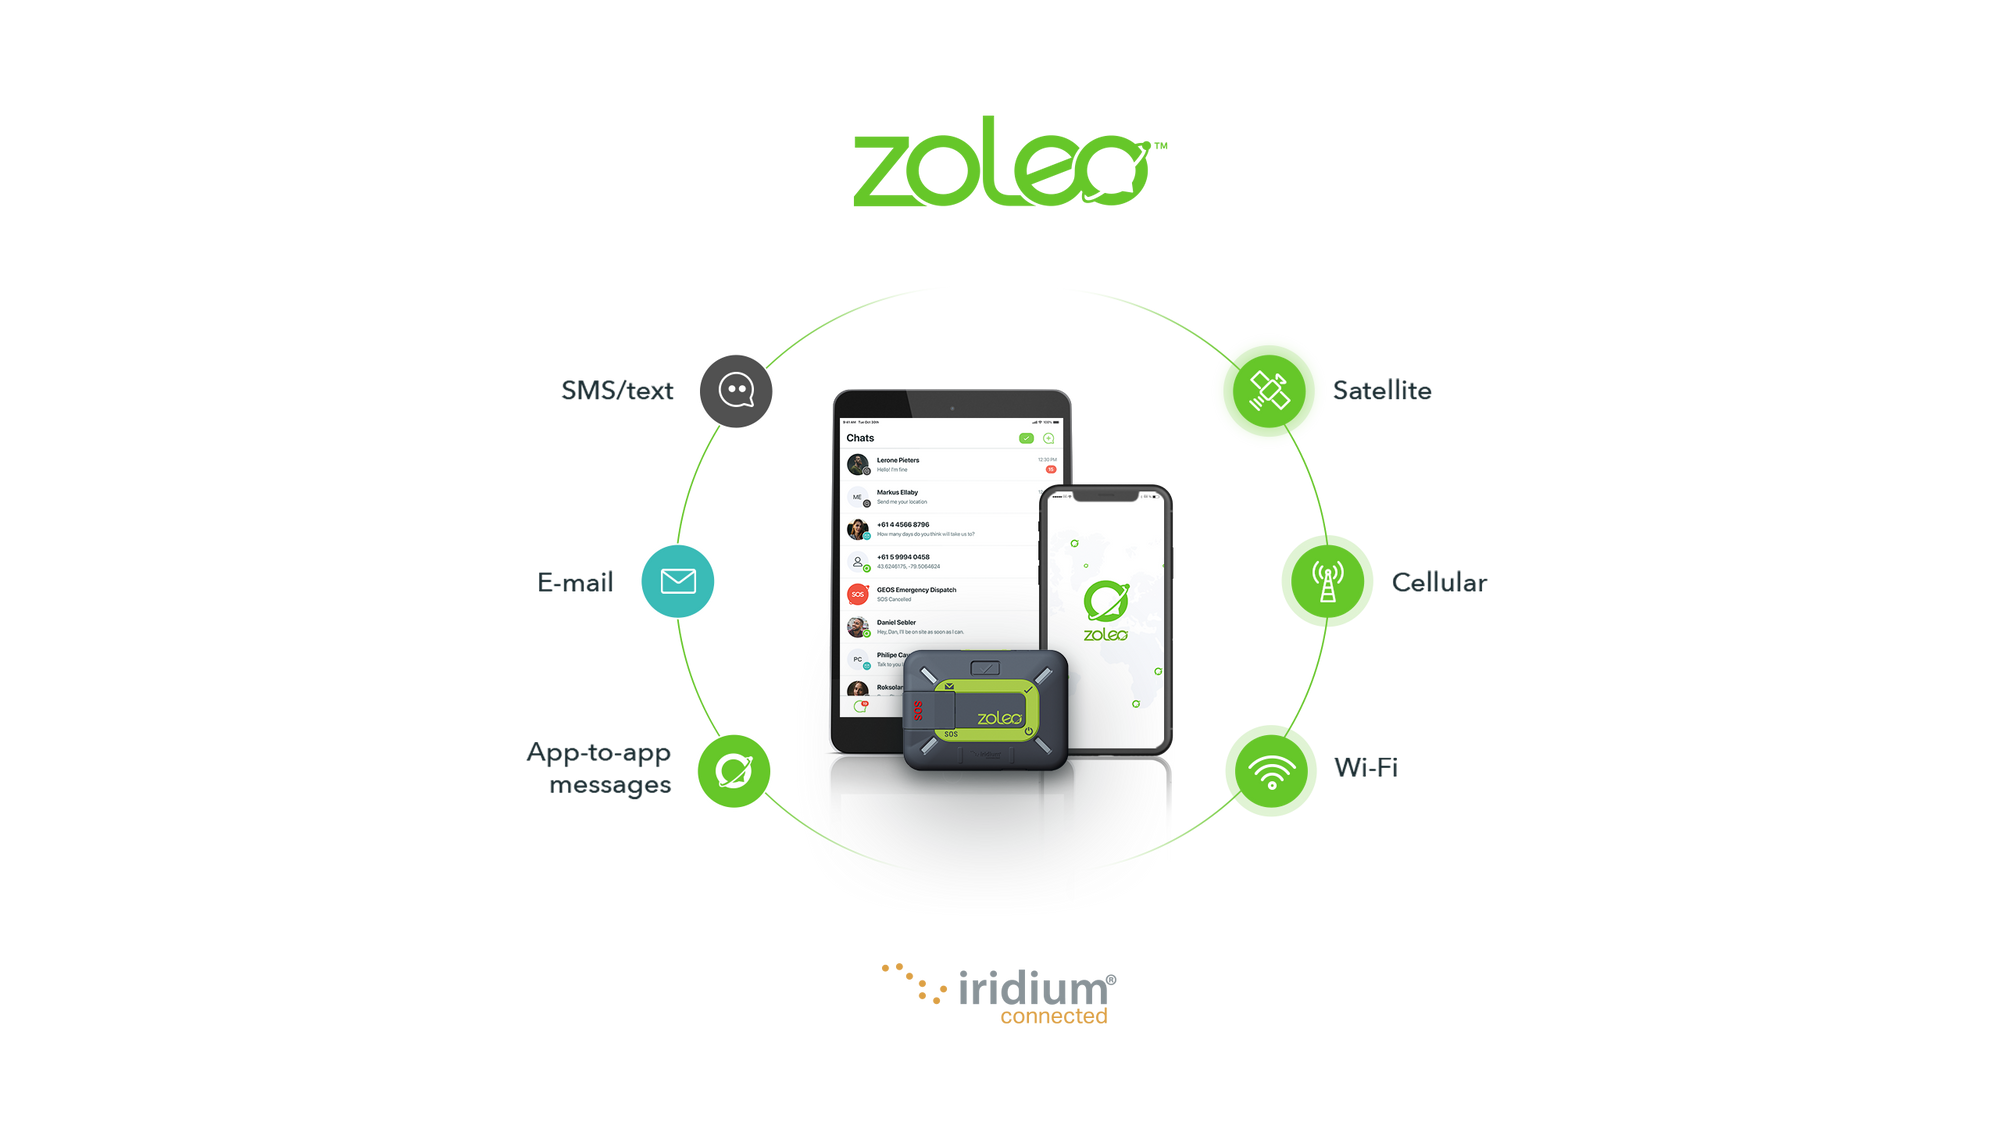 Zoleo Satellite Communicator